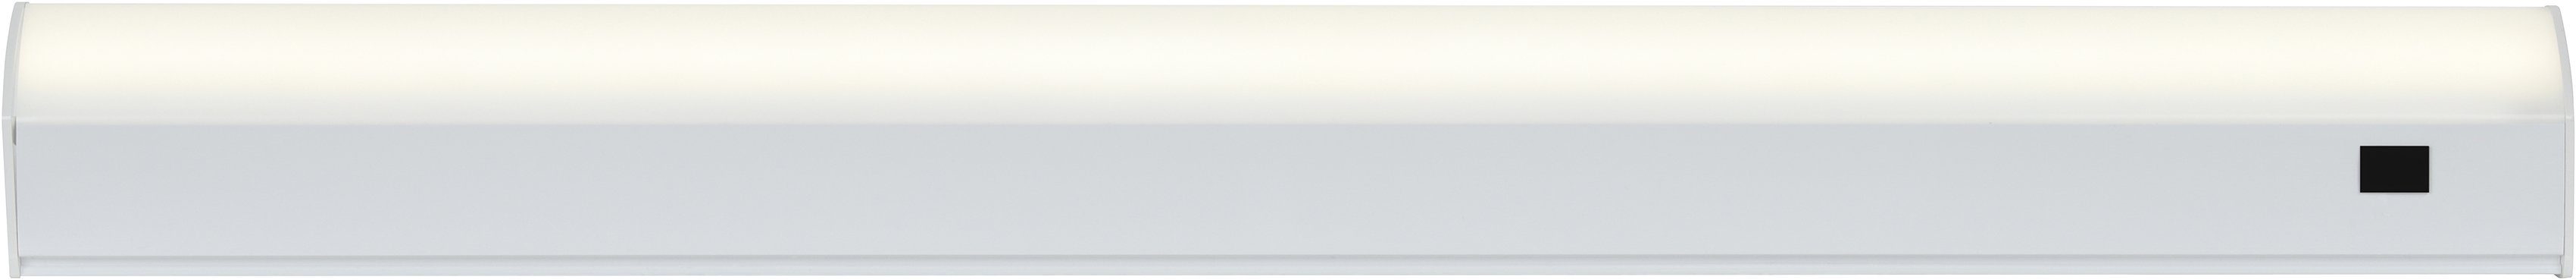 Nordlux Unterschrankleuchte Bity, LED 530 fest LED, inkl. 6W Bewegungssensor Warmweiß, Lumen, integriert, inkl